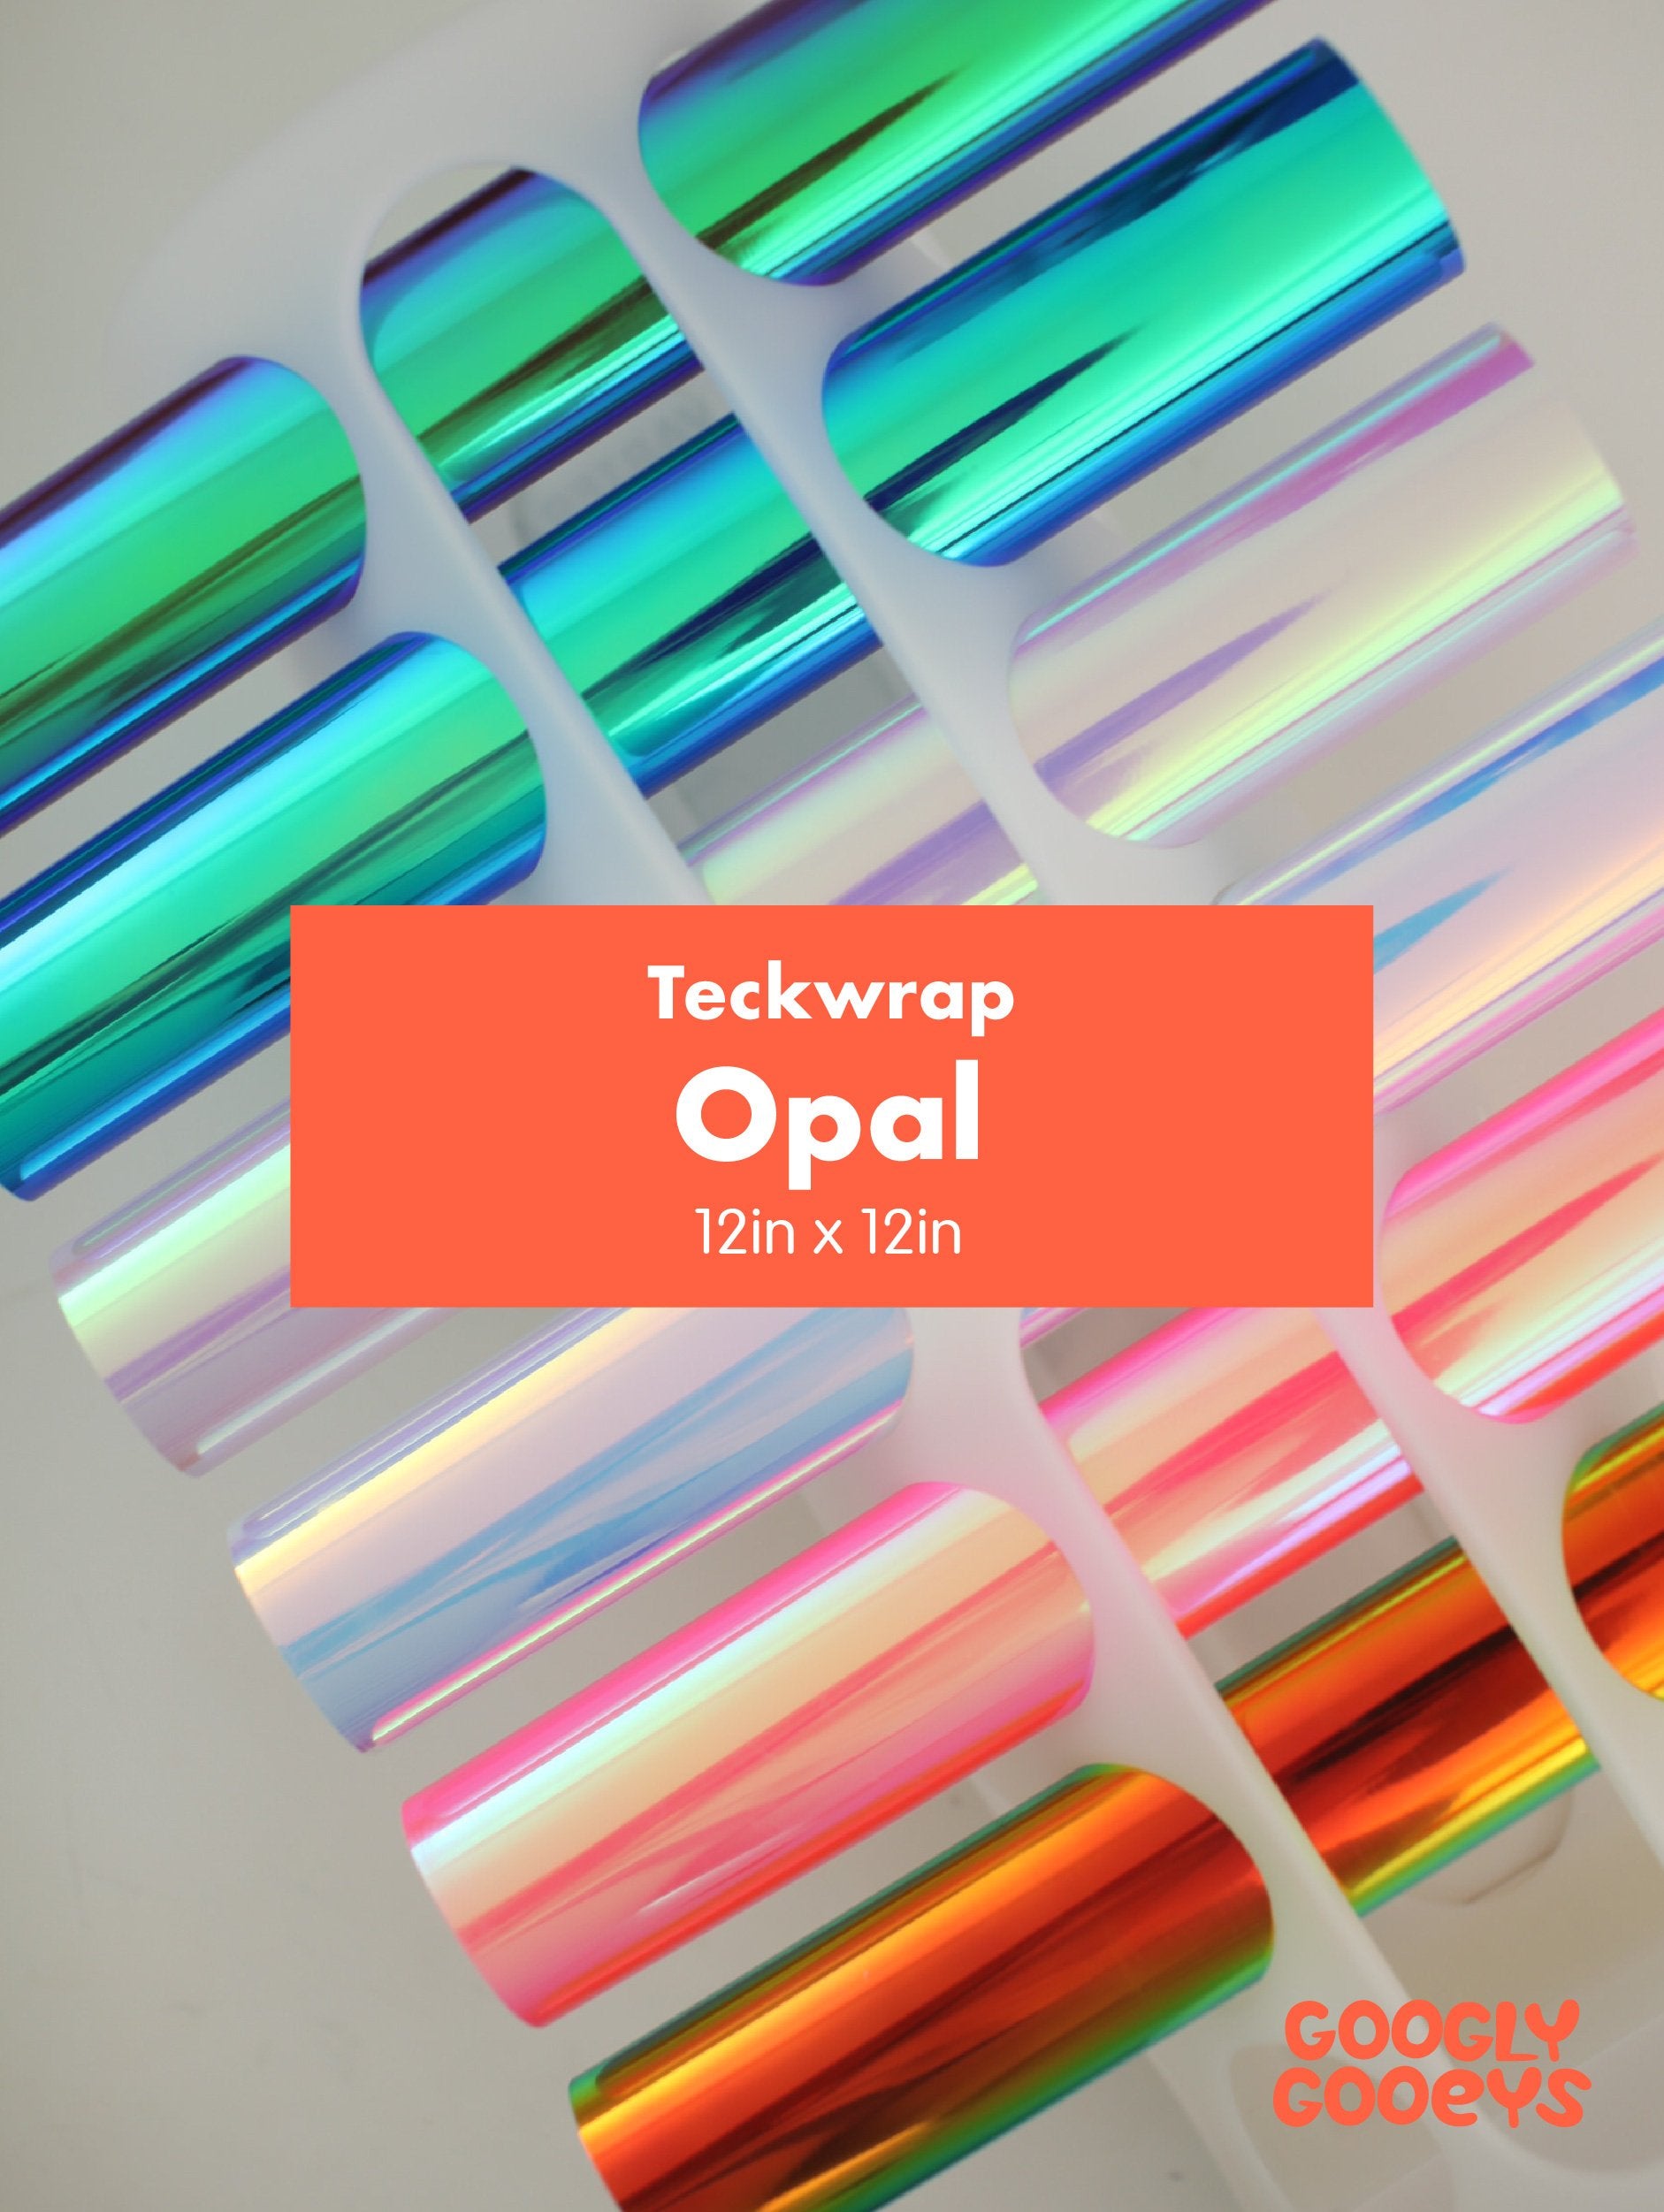 Teckwrap Opal Adhesive Vinyl Stickers (12x12)